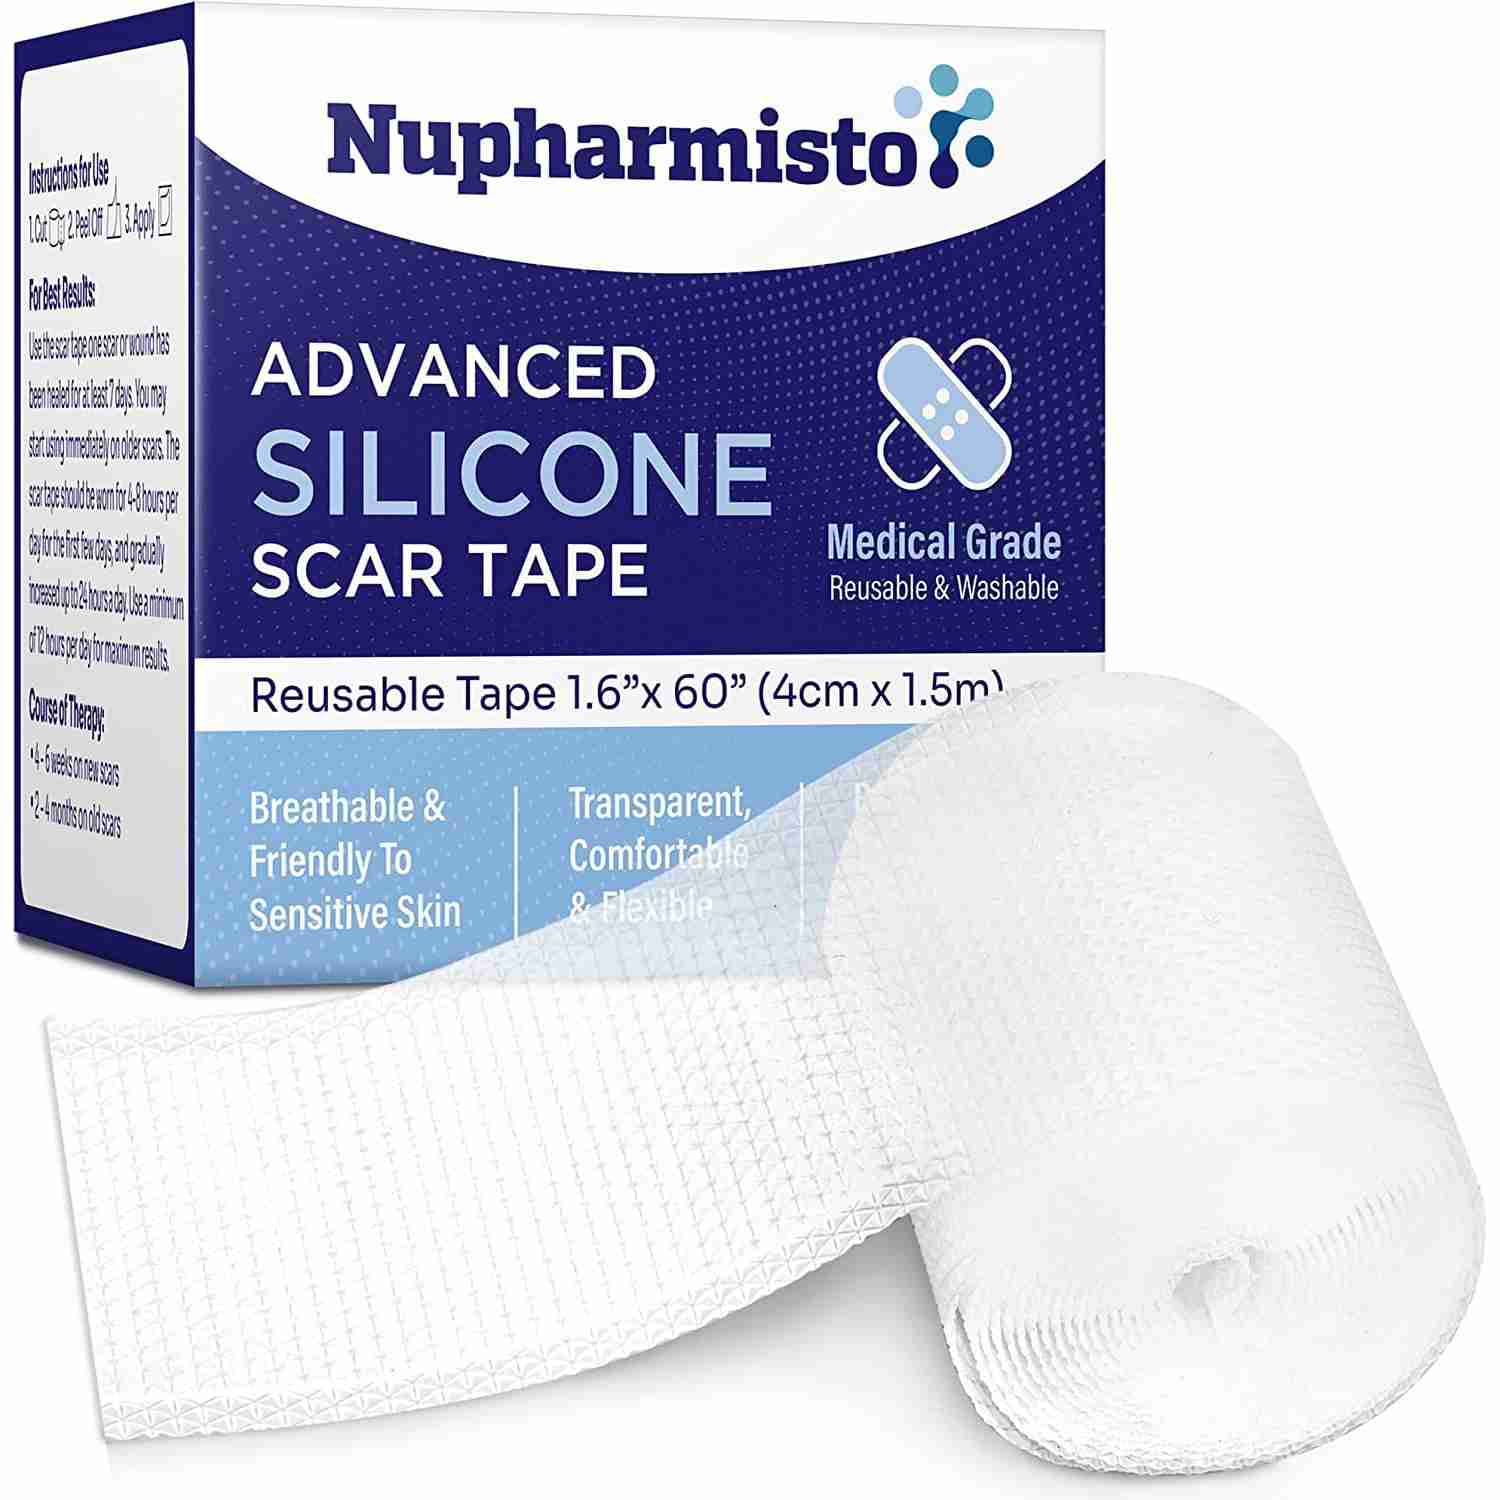 silicone-scar-tape-nupharmisto with cash back rebate